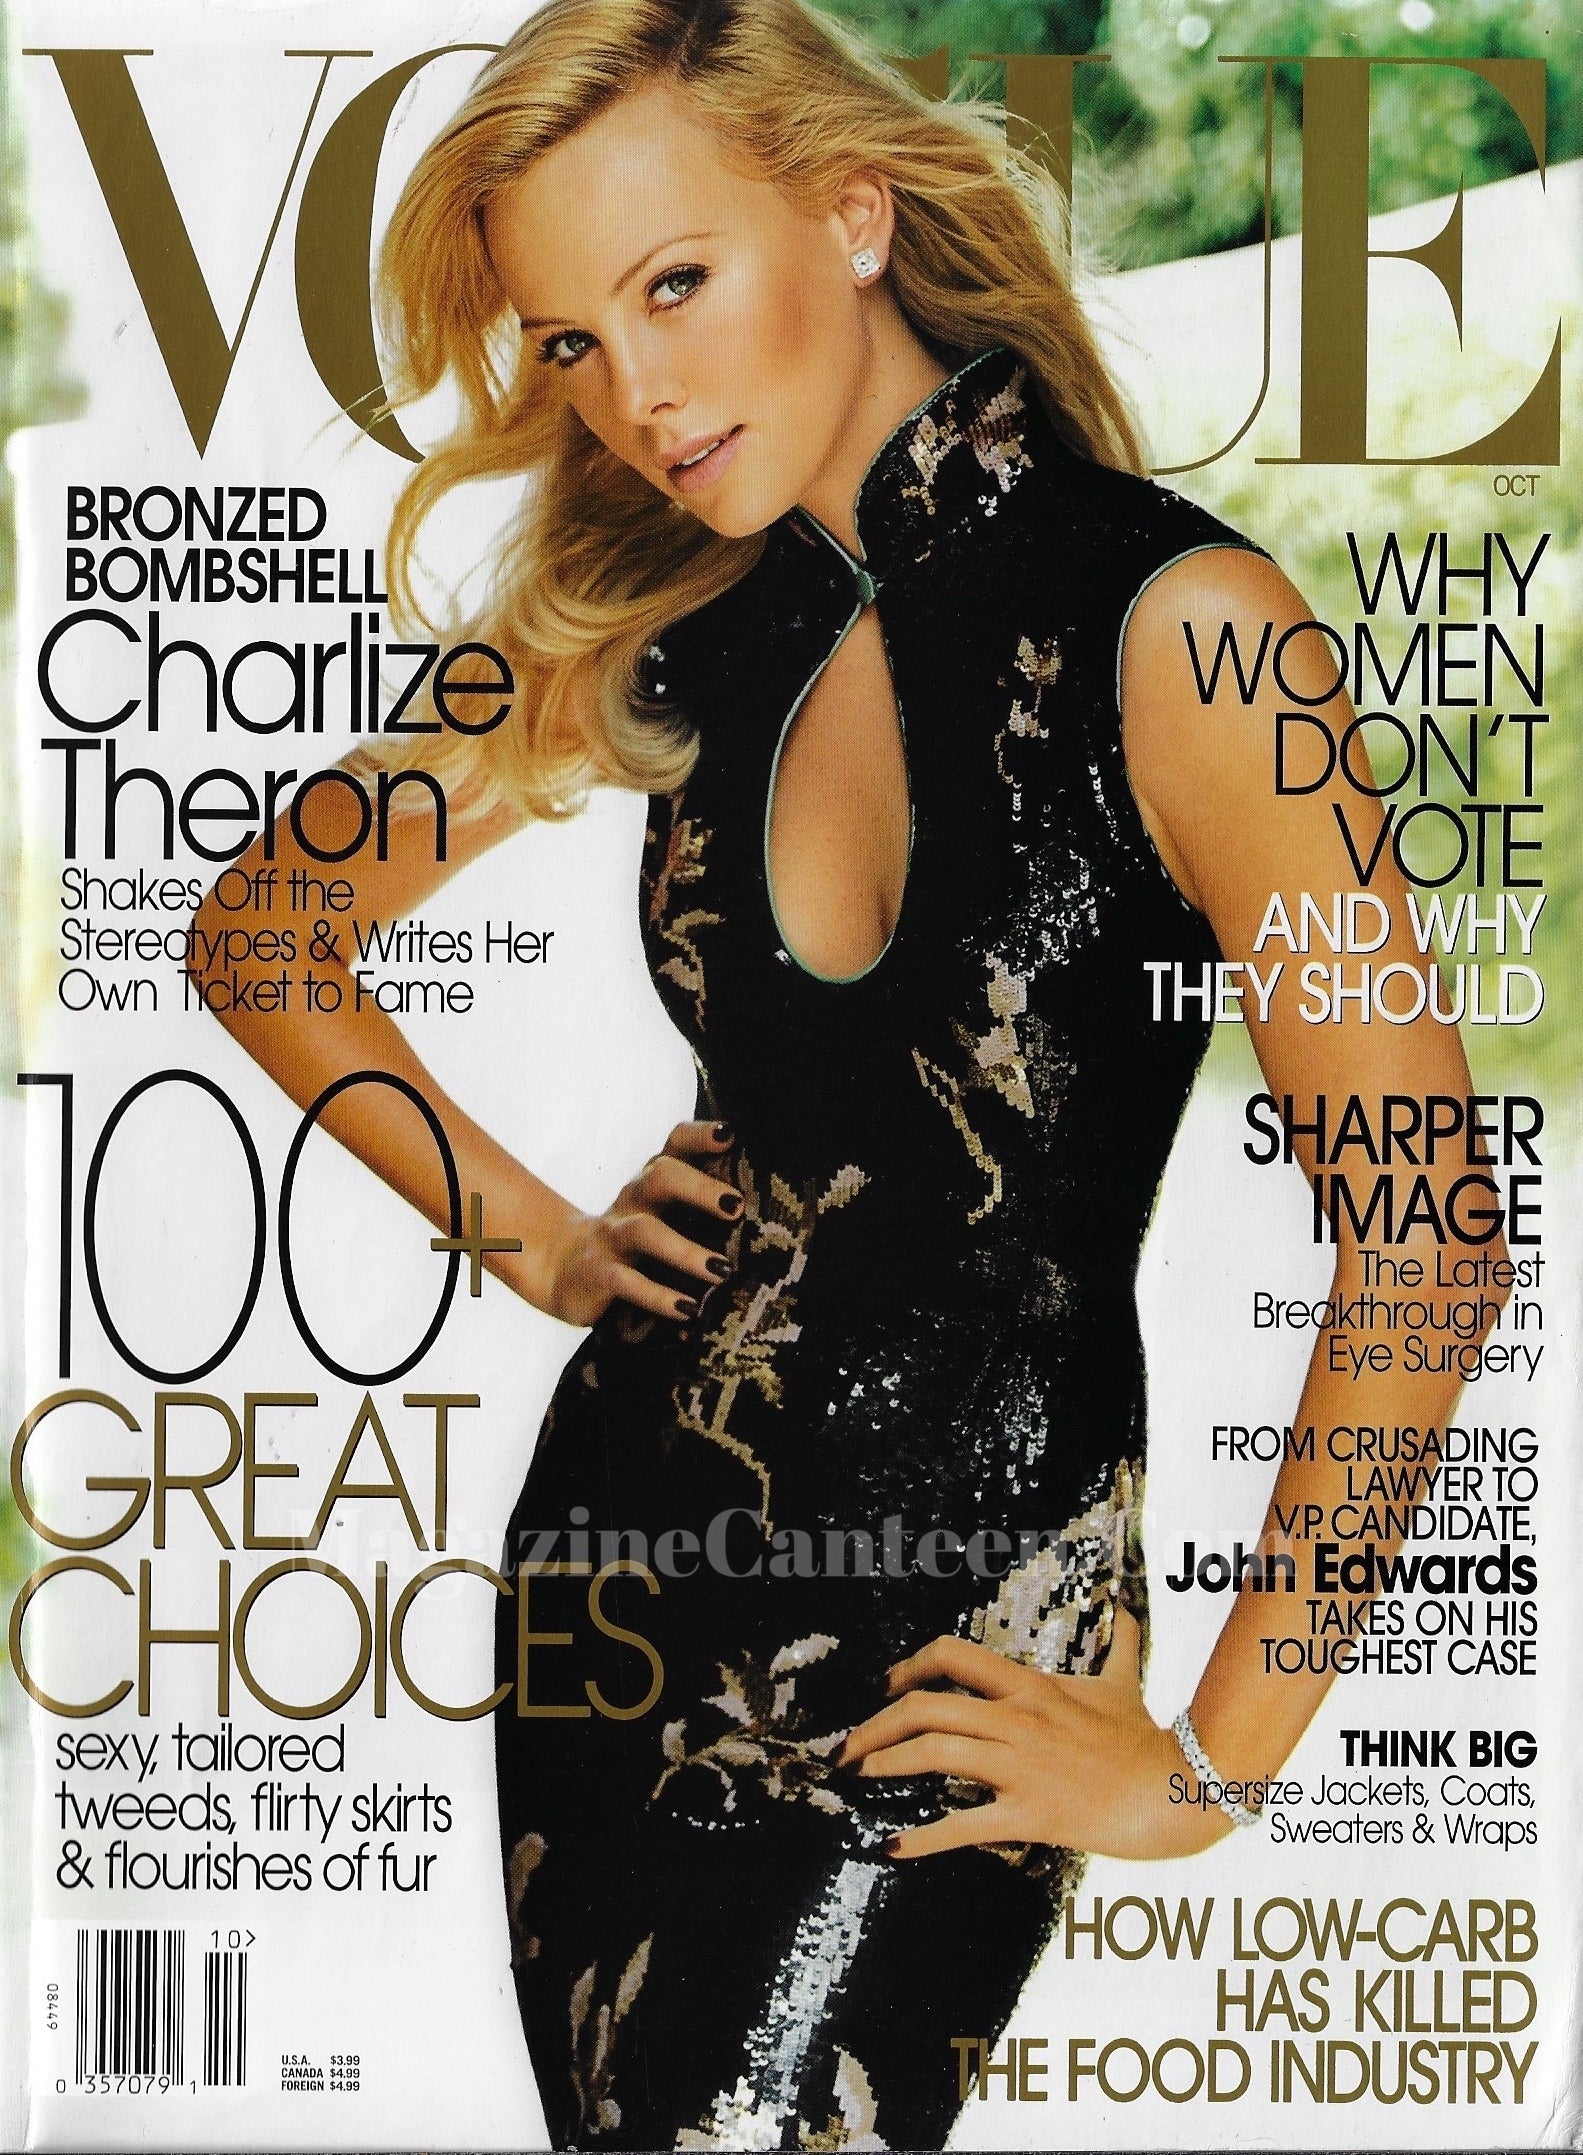  Vogue USA Magazine October 2004 - Charlize TheroN